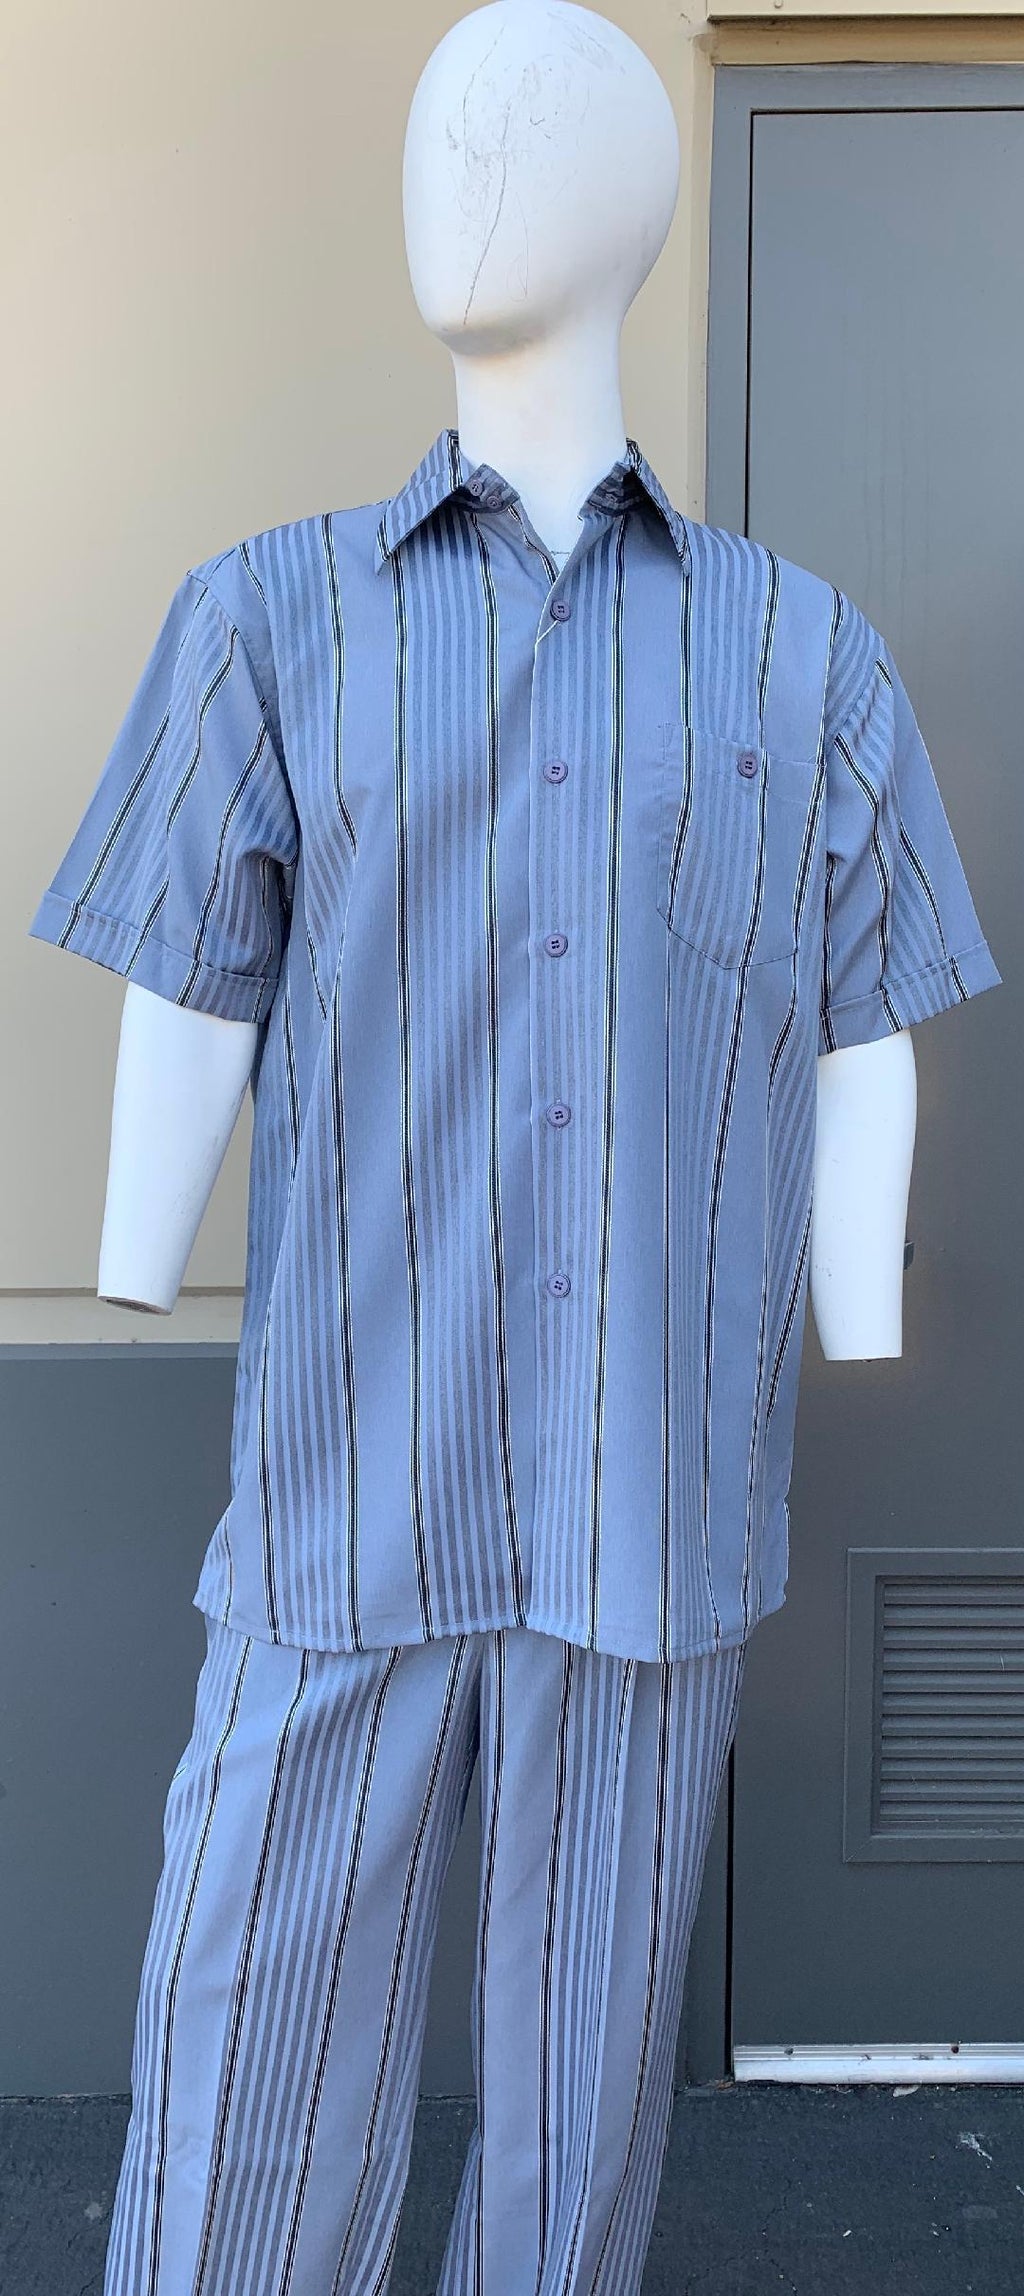 Lemongrass Stripes Short Sleeve 2pc Walking Suit Set - Sky Blue